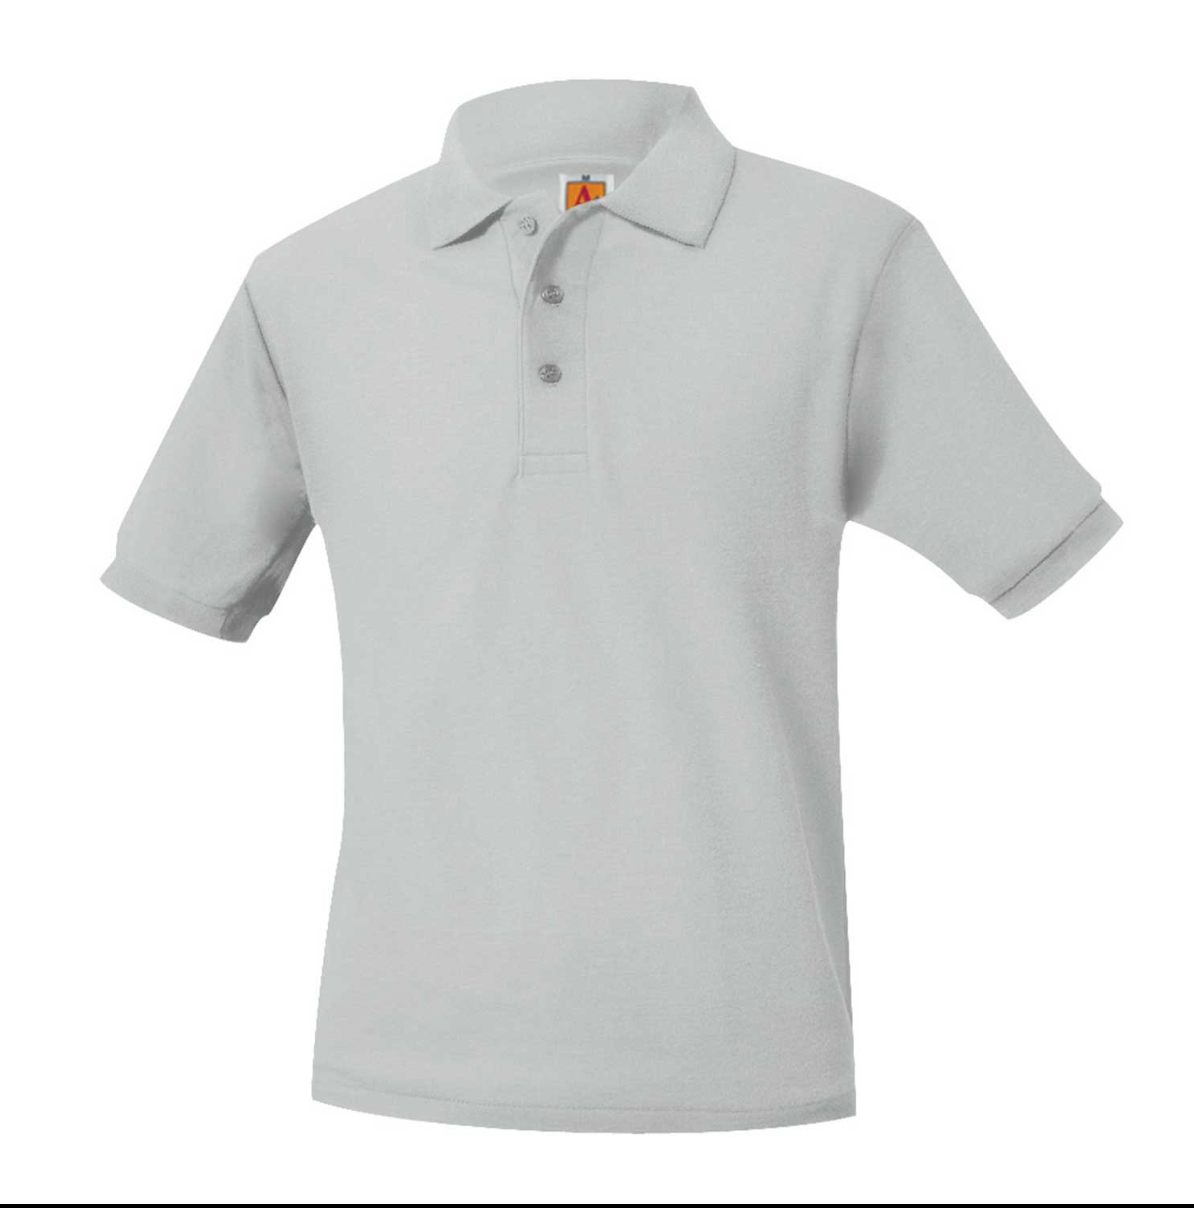 Standifer Gap Unisex Pique Polo Shirt